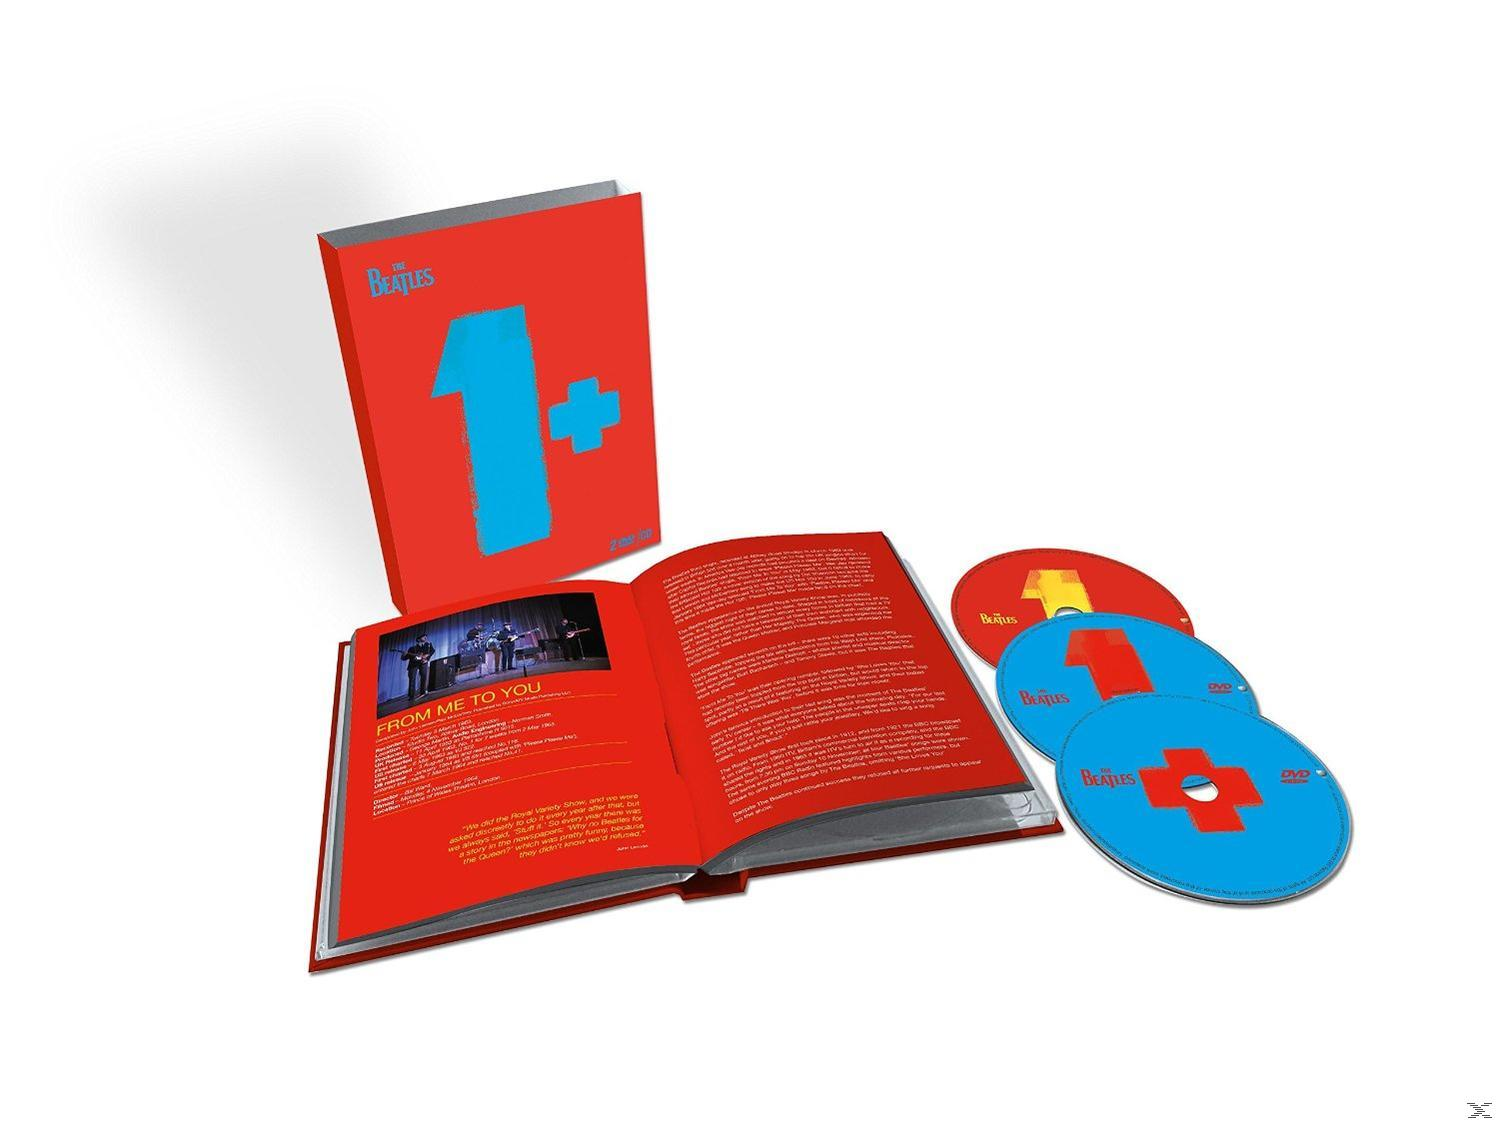 The Beatles - 1 (LTD (CD Edition Video) Deluxe CD+2DVD) + DVD 